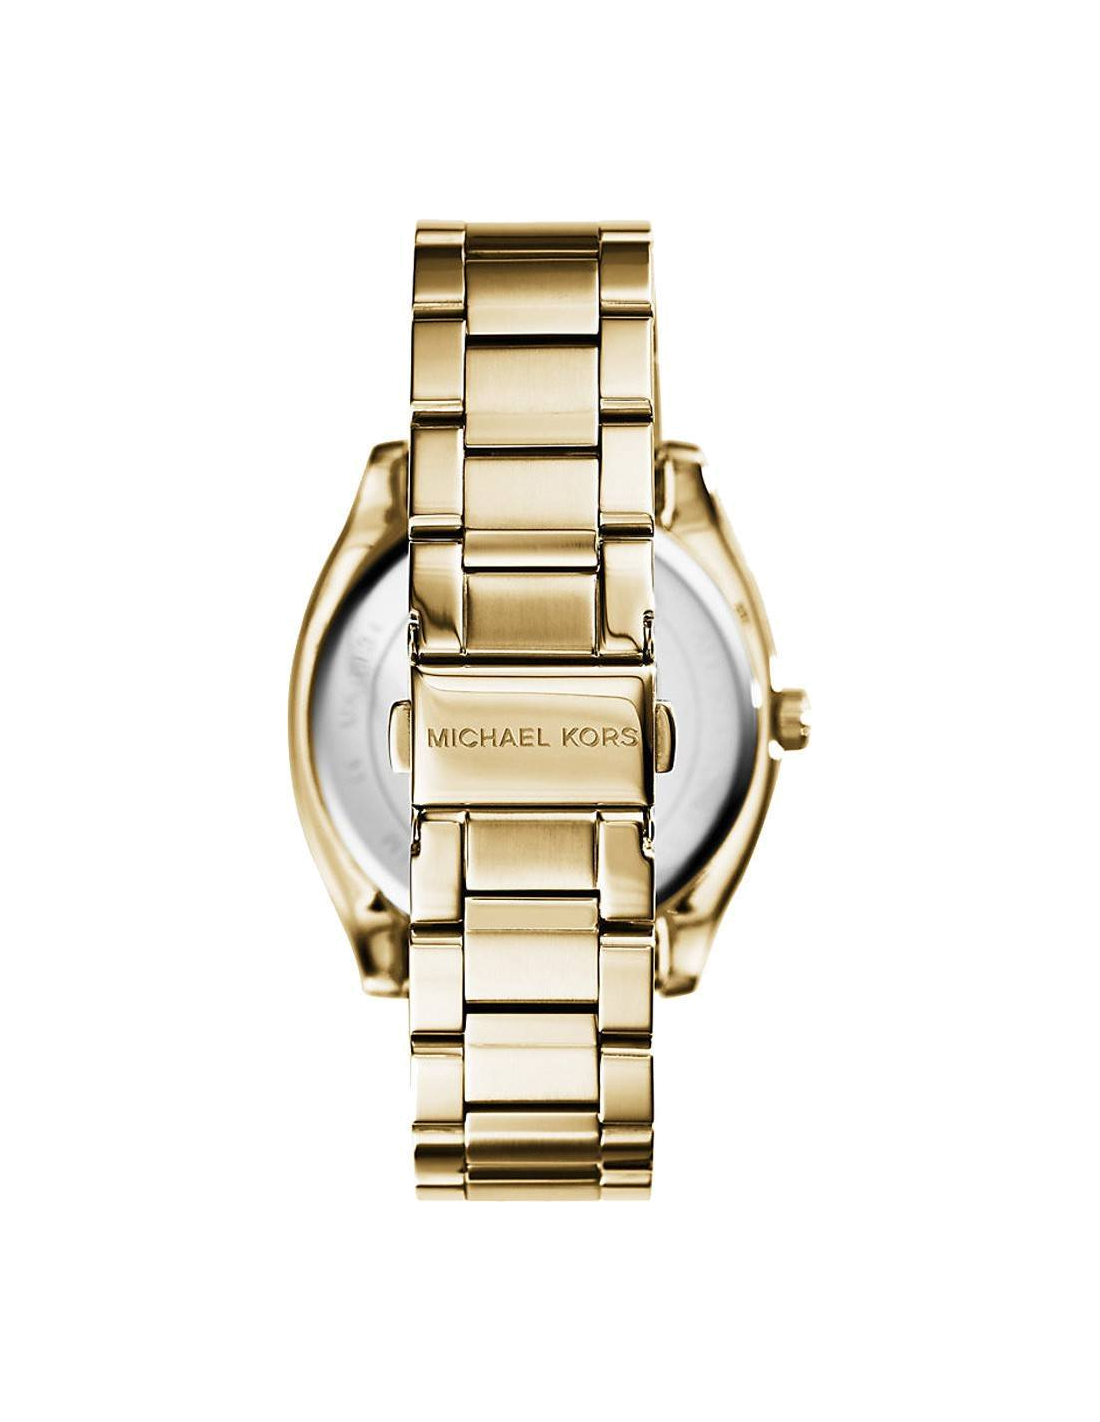 Michael Kors MK6134 women's watch at 195,30 € Authorized Vendor